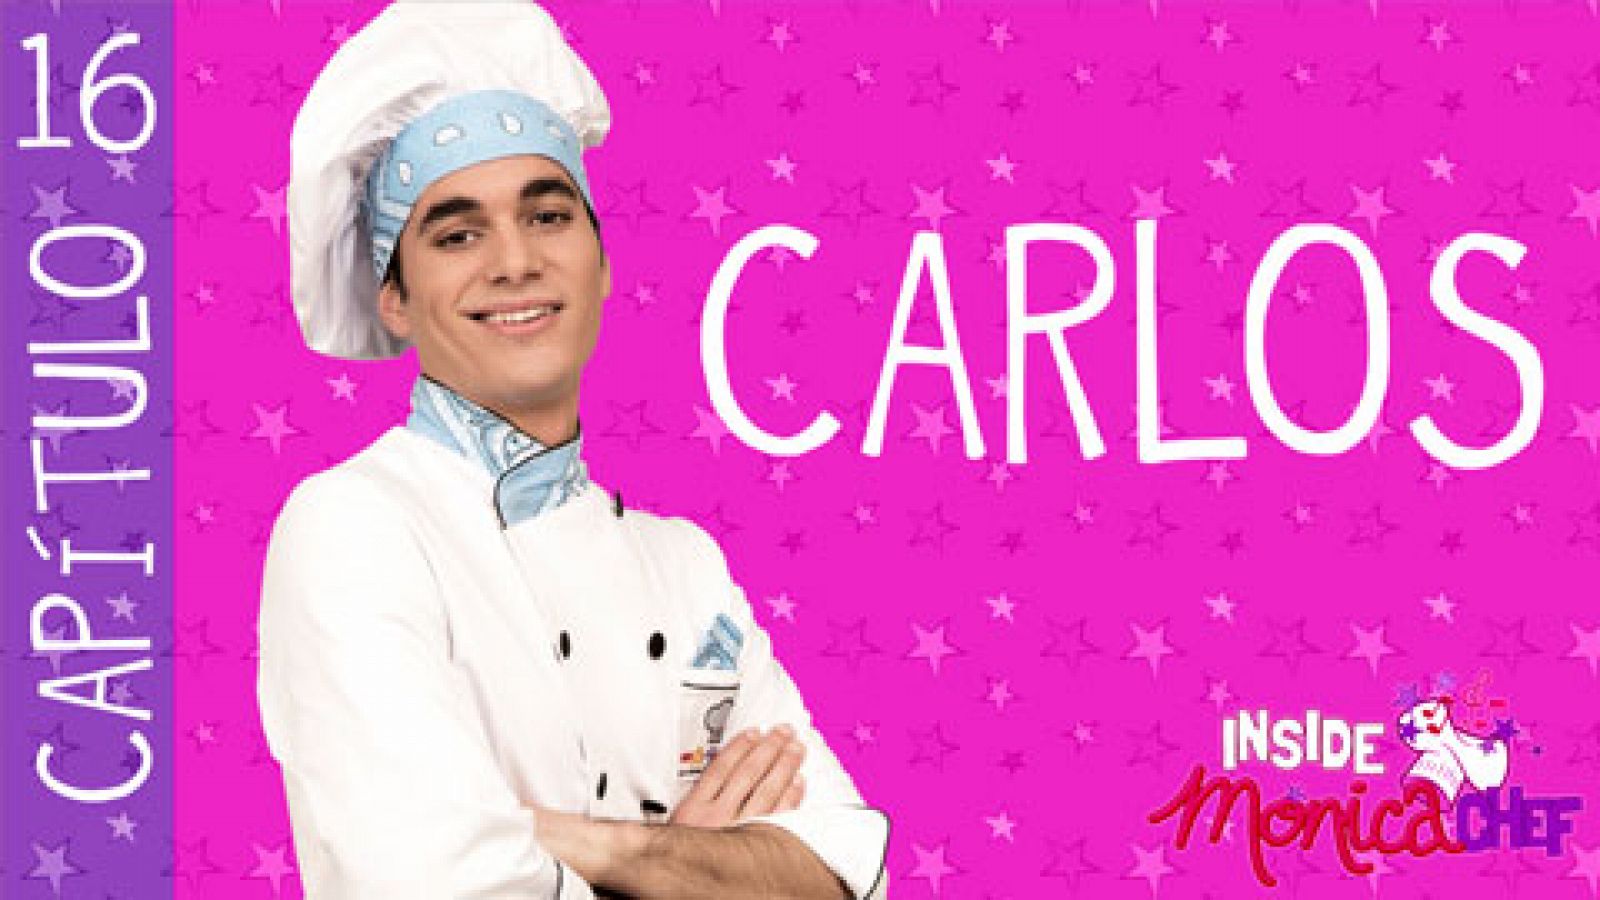 Sin programa: Inside Mónica Chef 16 - Carlos | RTVE Play